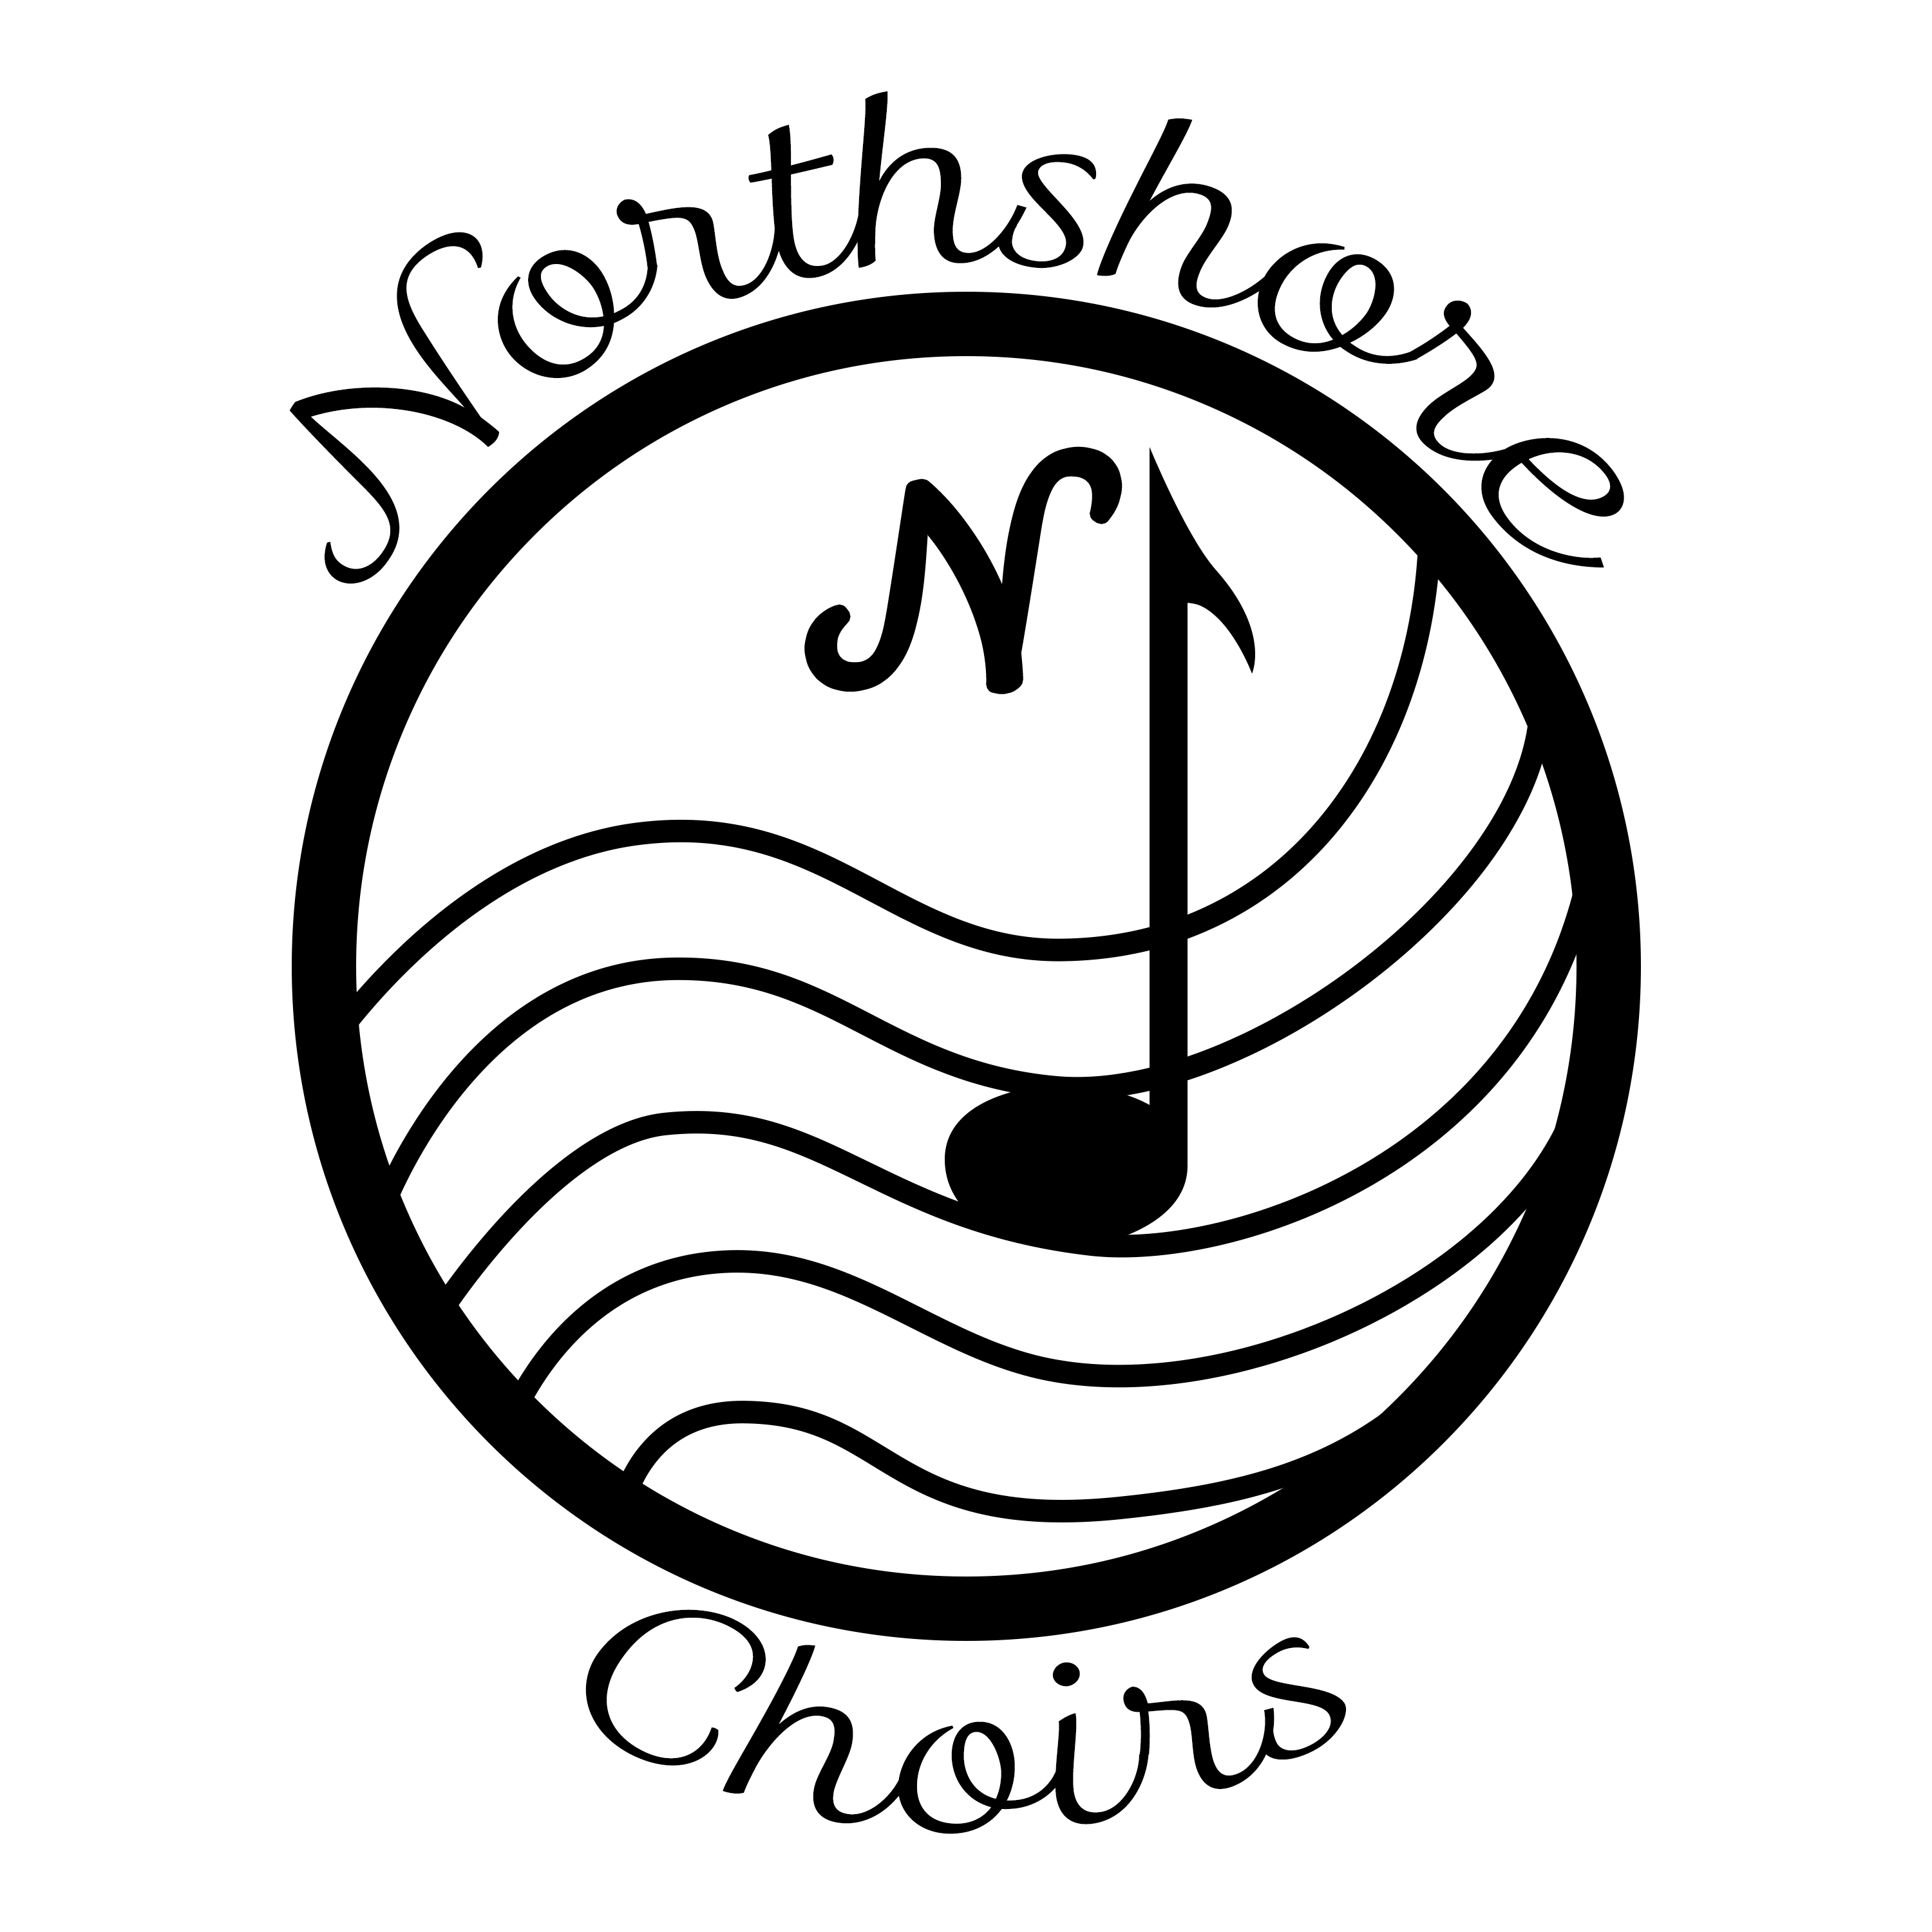 Northshore Choirs